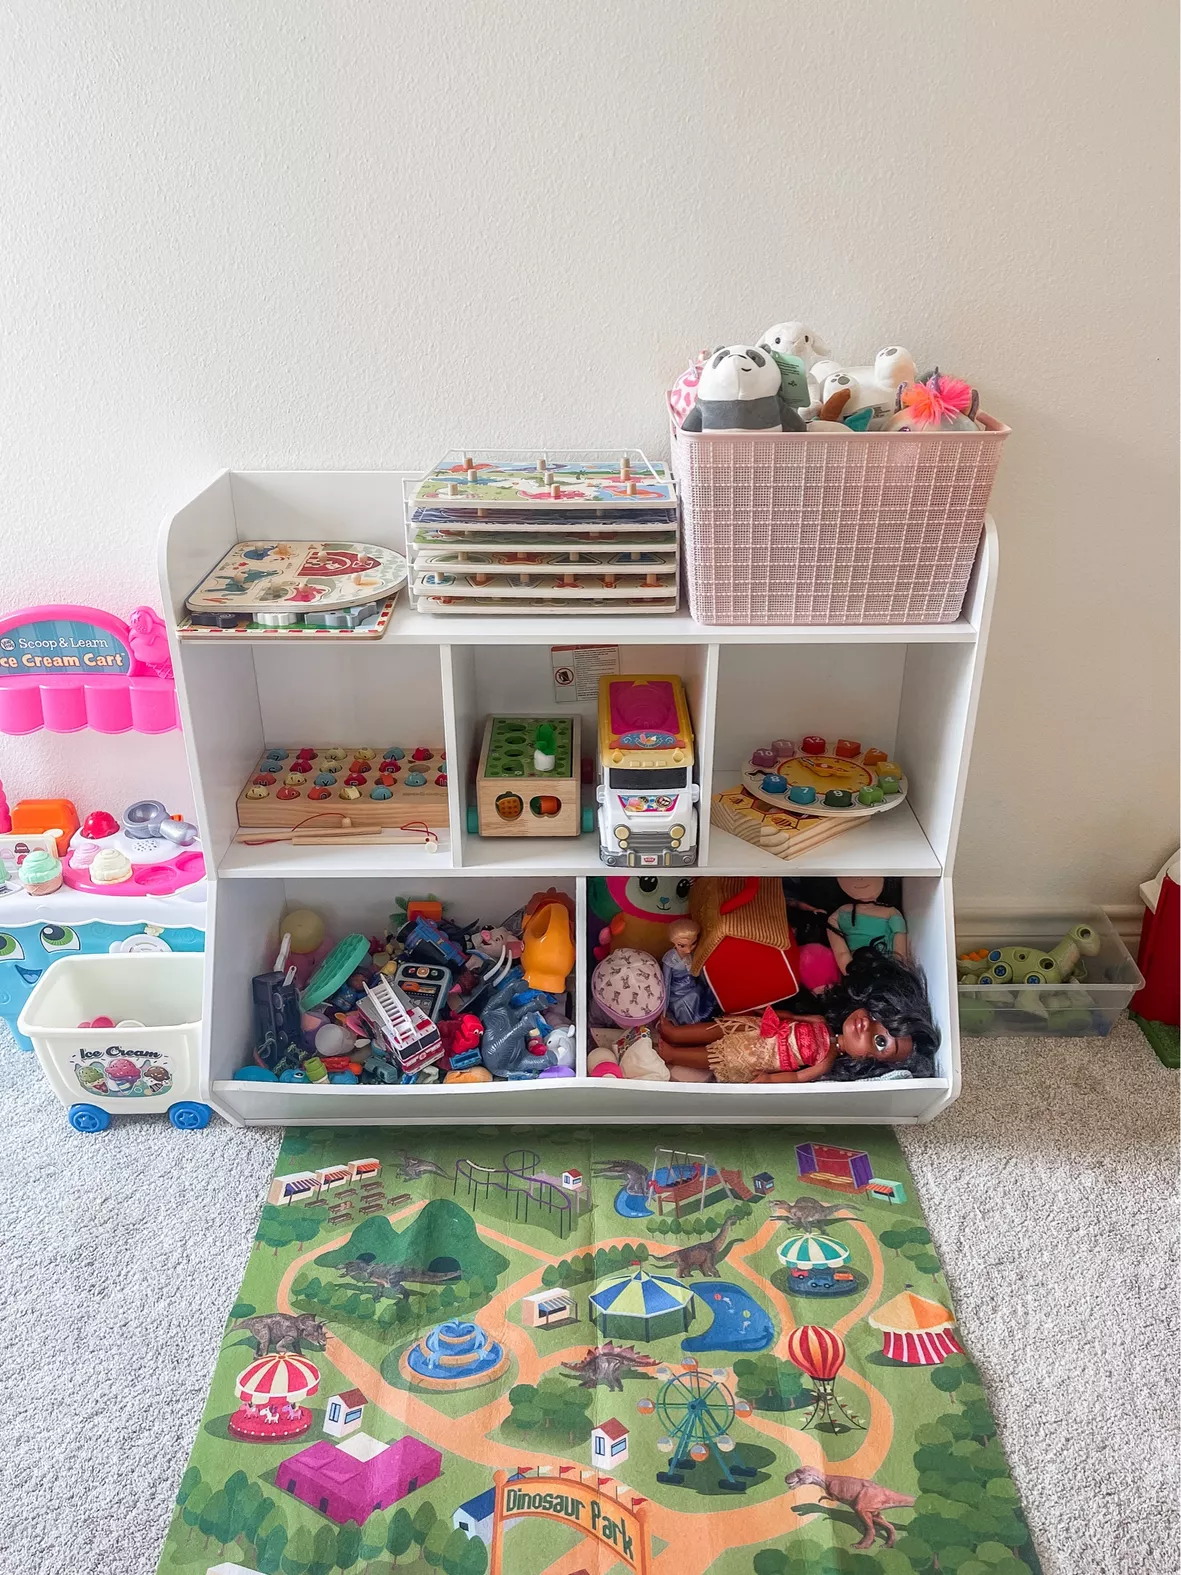 Small Kids' Storage House Toy Organizer in White